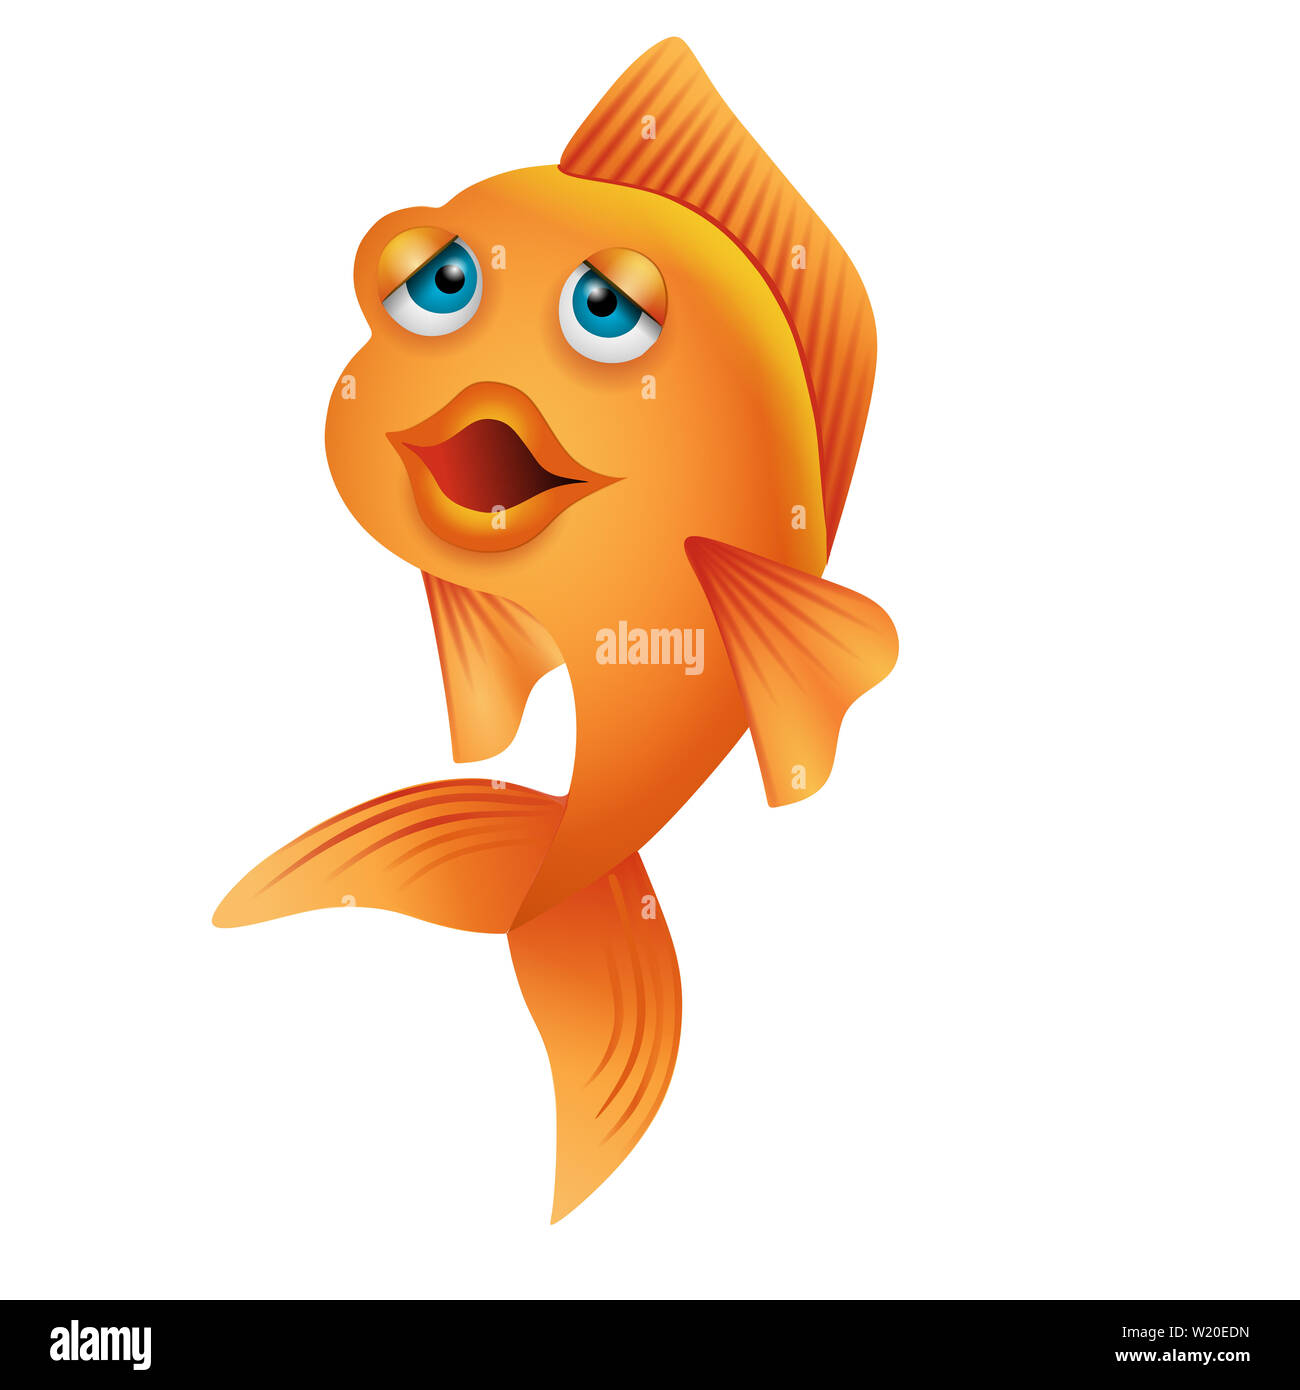 funny cartoon red fish illustration Stock Photo